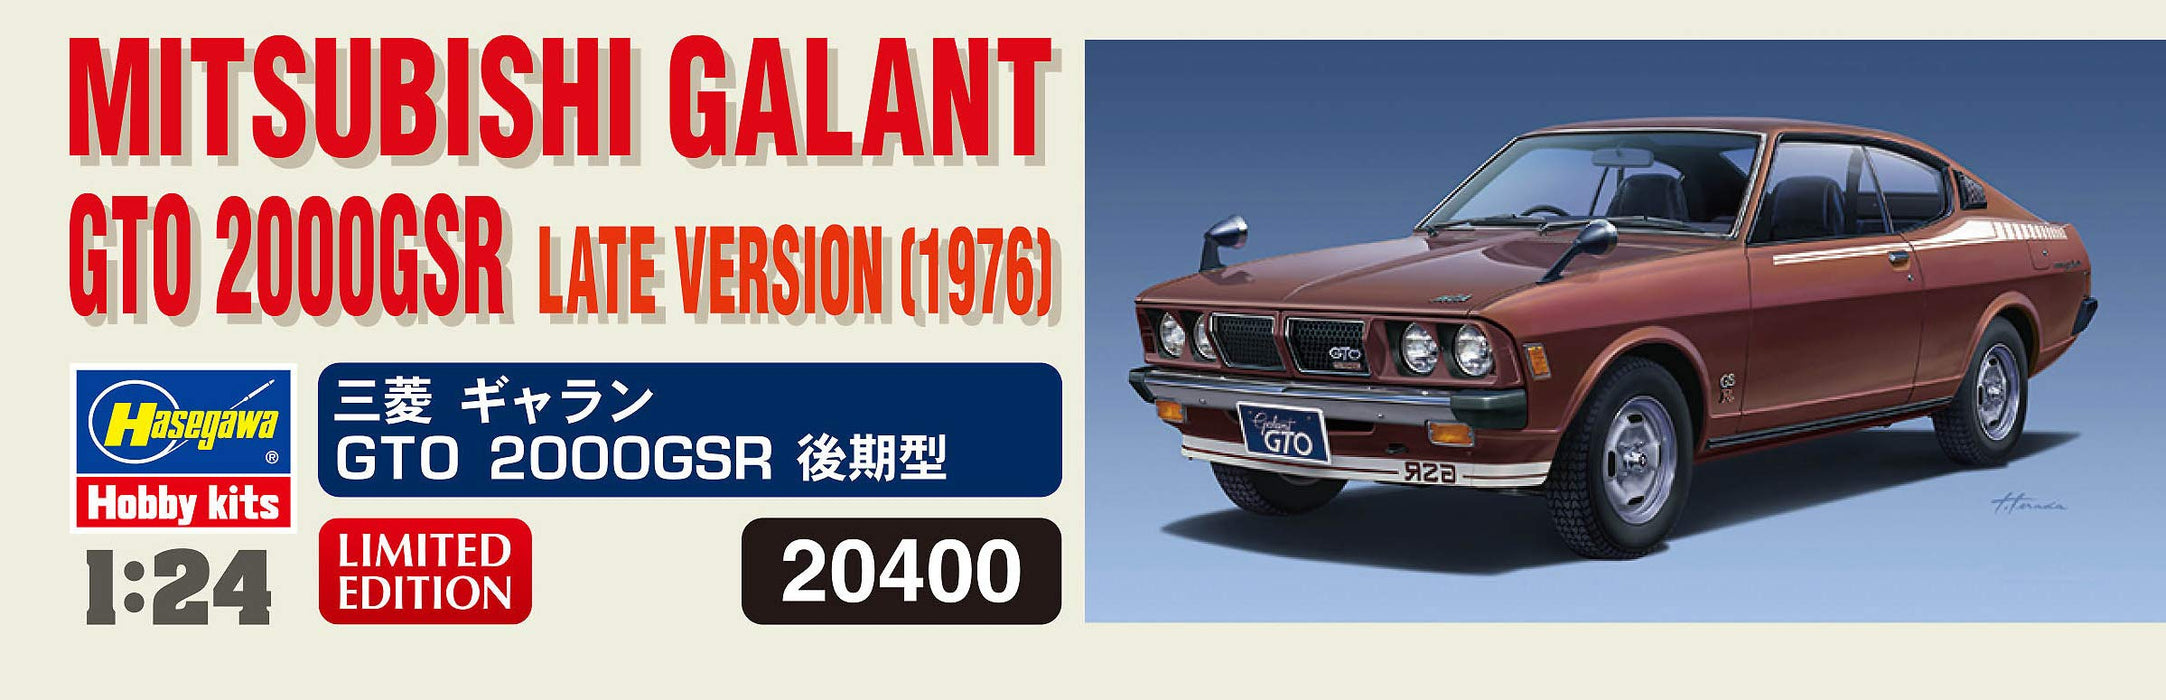 Hasegawa 20400 Mitsubishi Galant GTO 2000GSR Late Type, Automodellbausatz im Maßstab 1/24